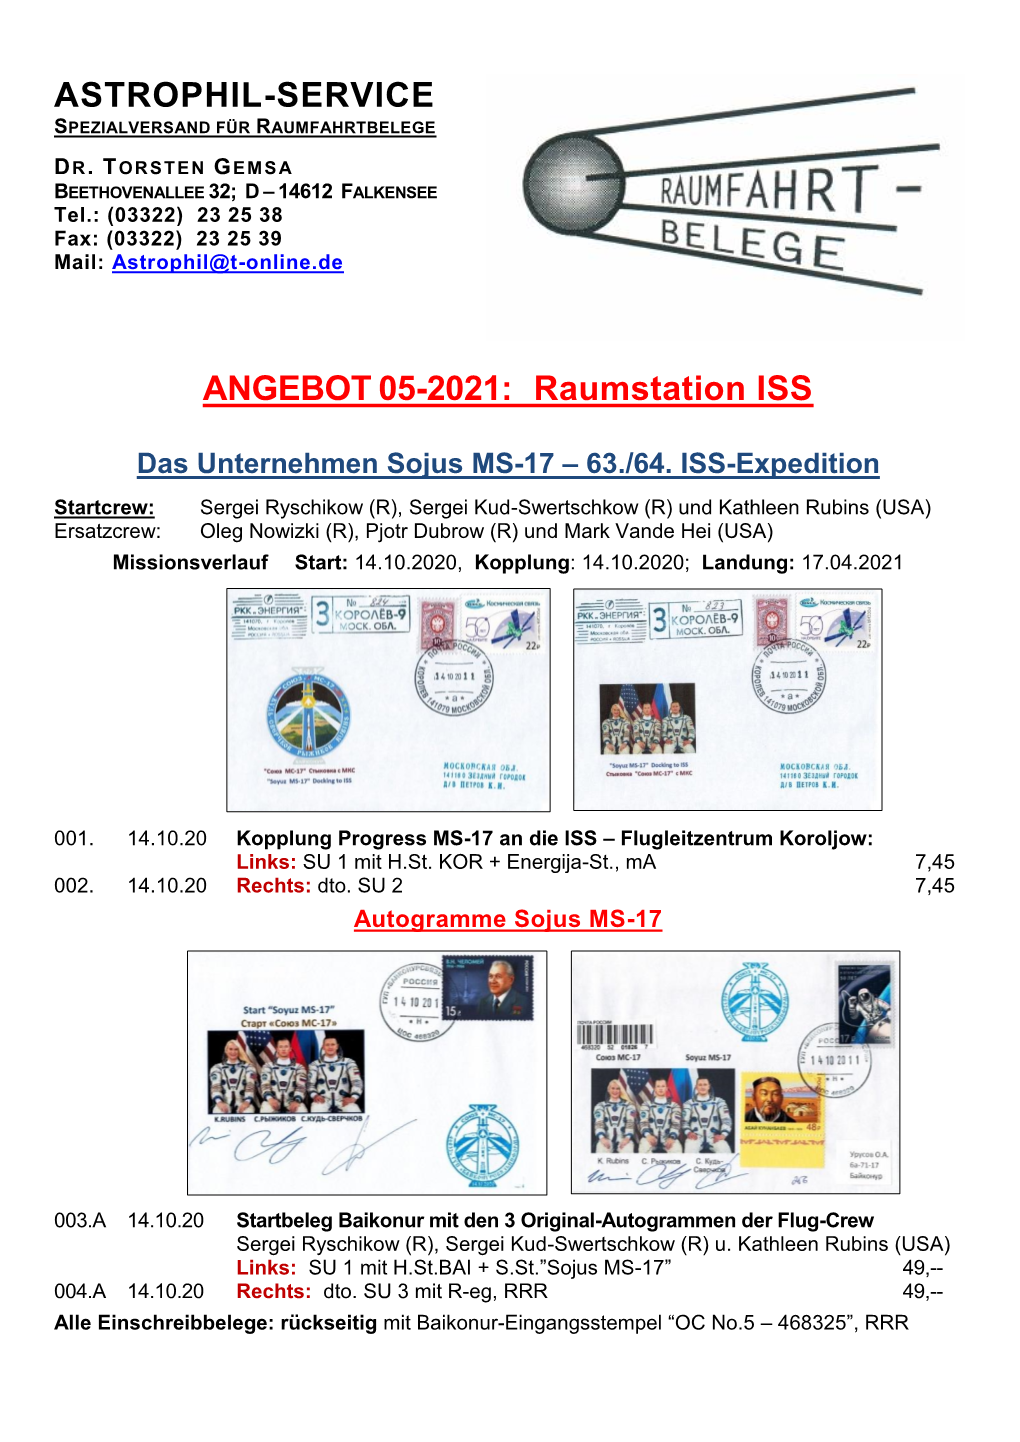 ASTROPHIL-SERVICE ANGEBOT 05-2021: Raumstation